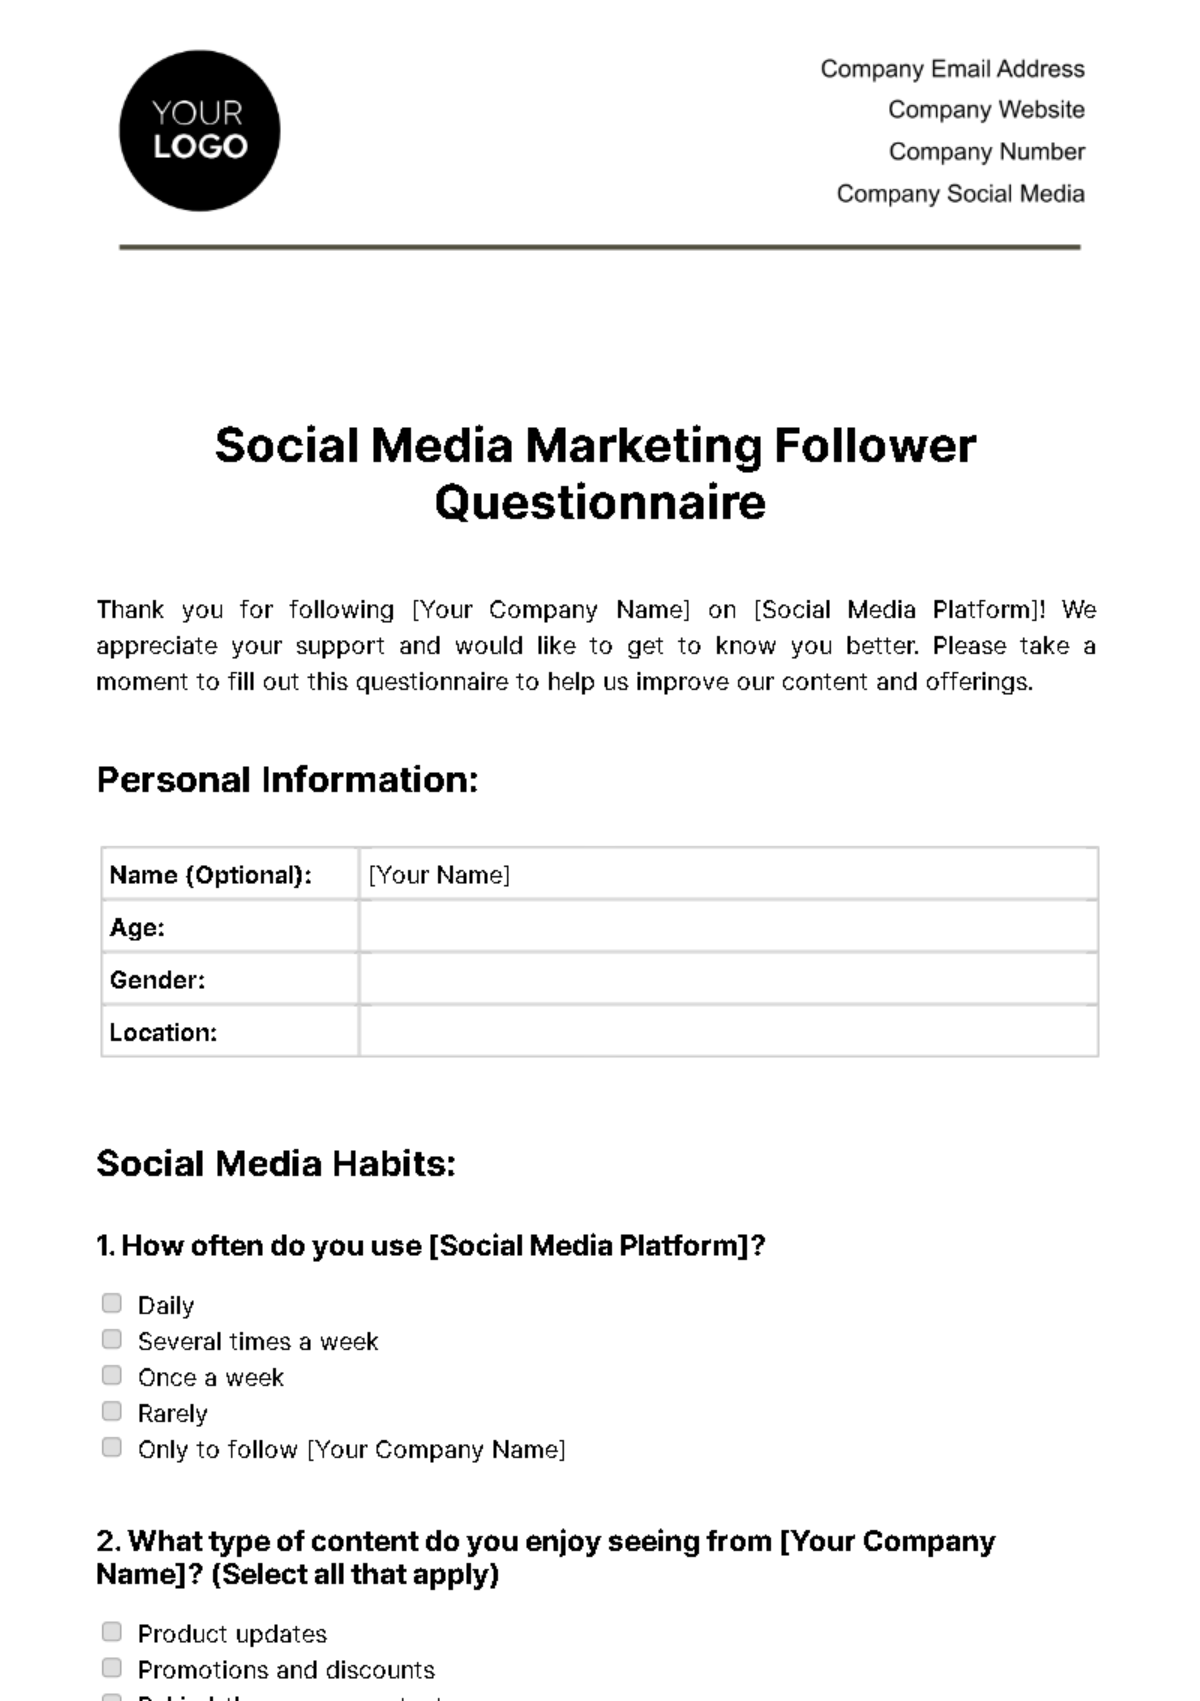 Social Media Marketing Follower Questionnaire Template